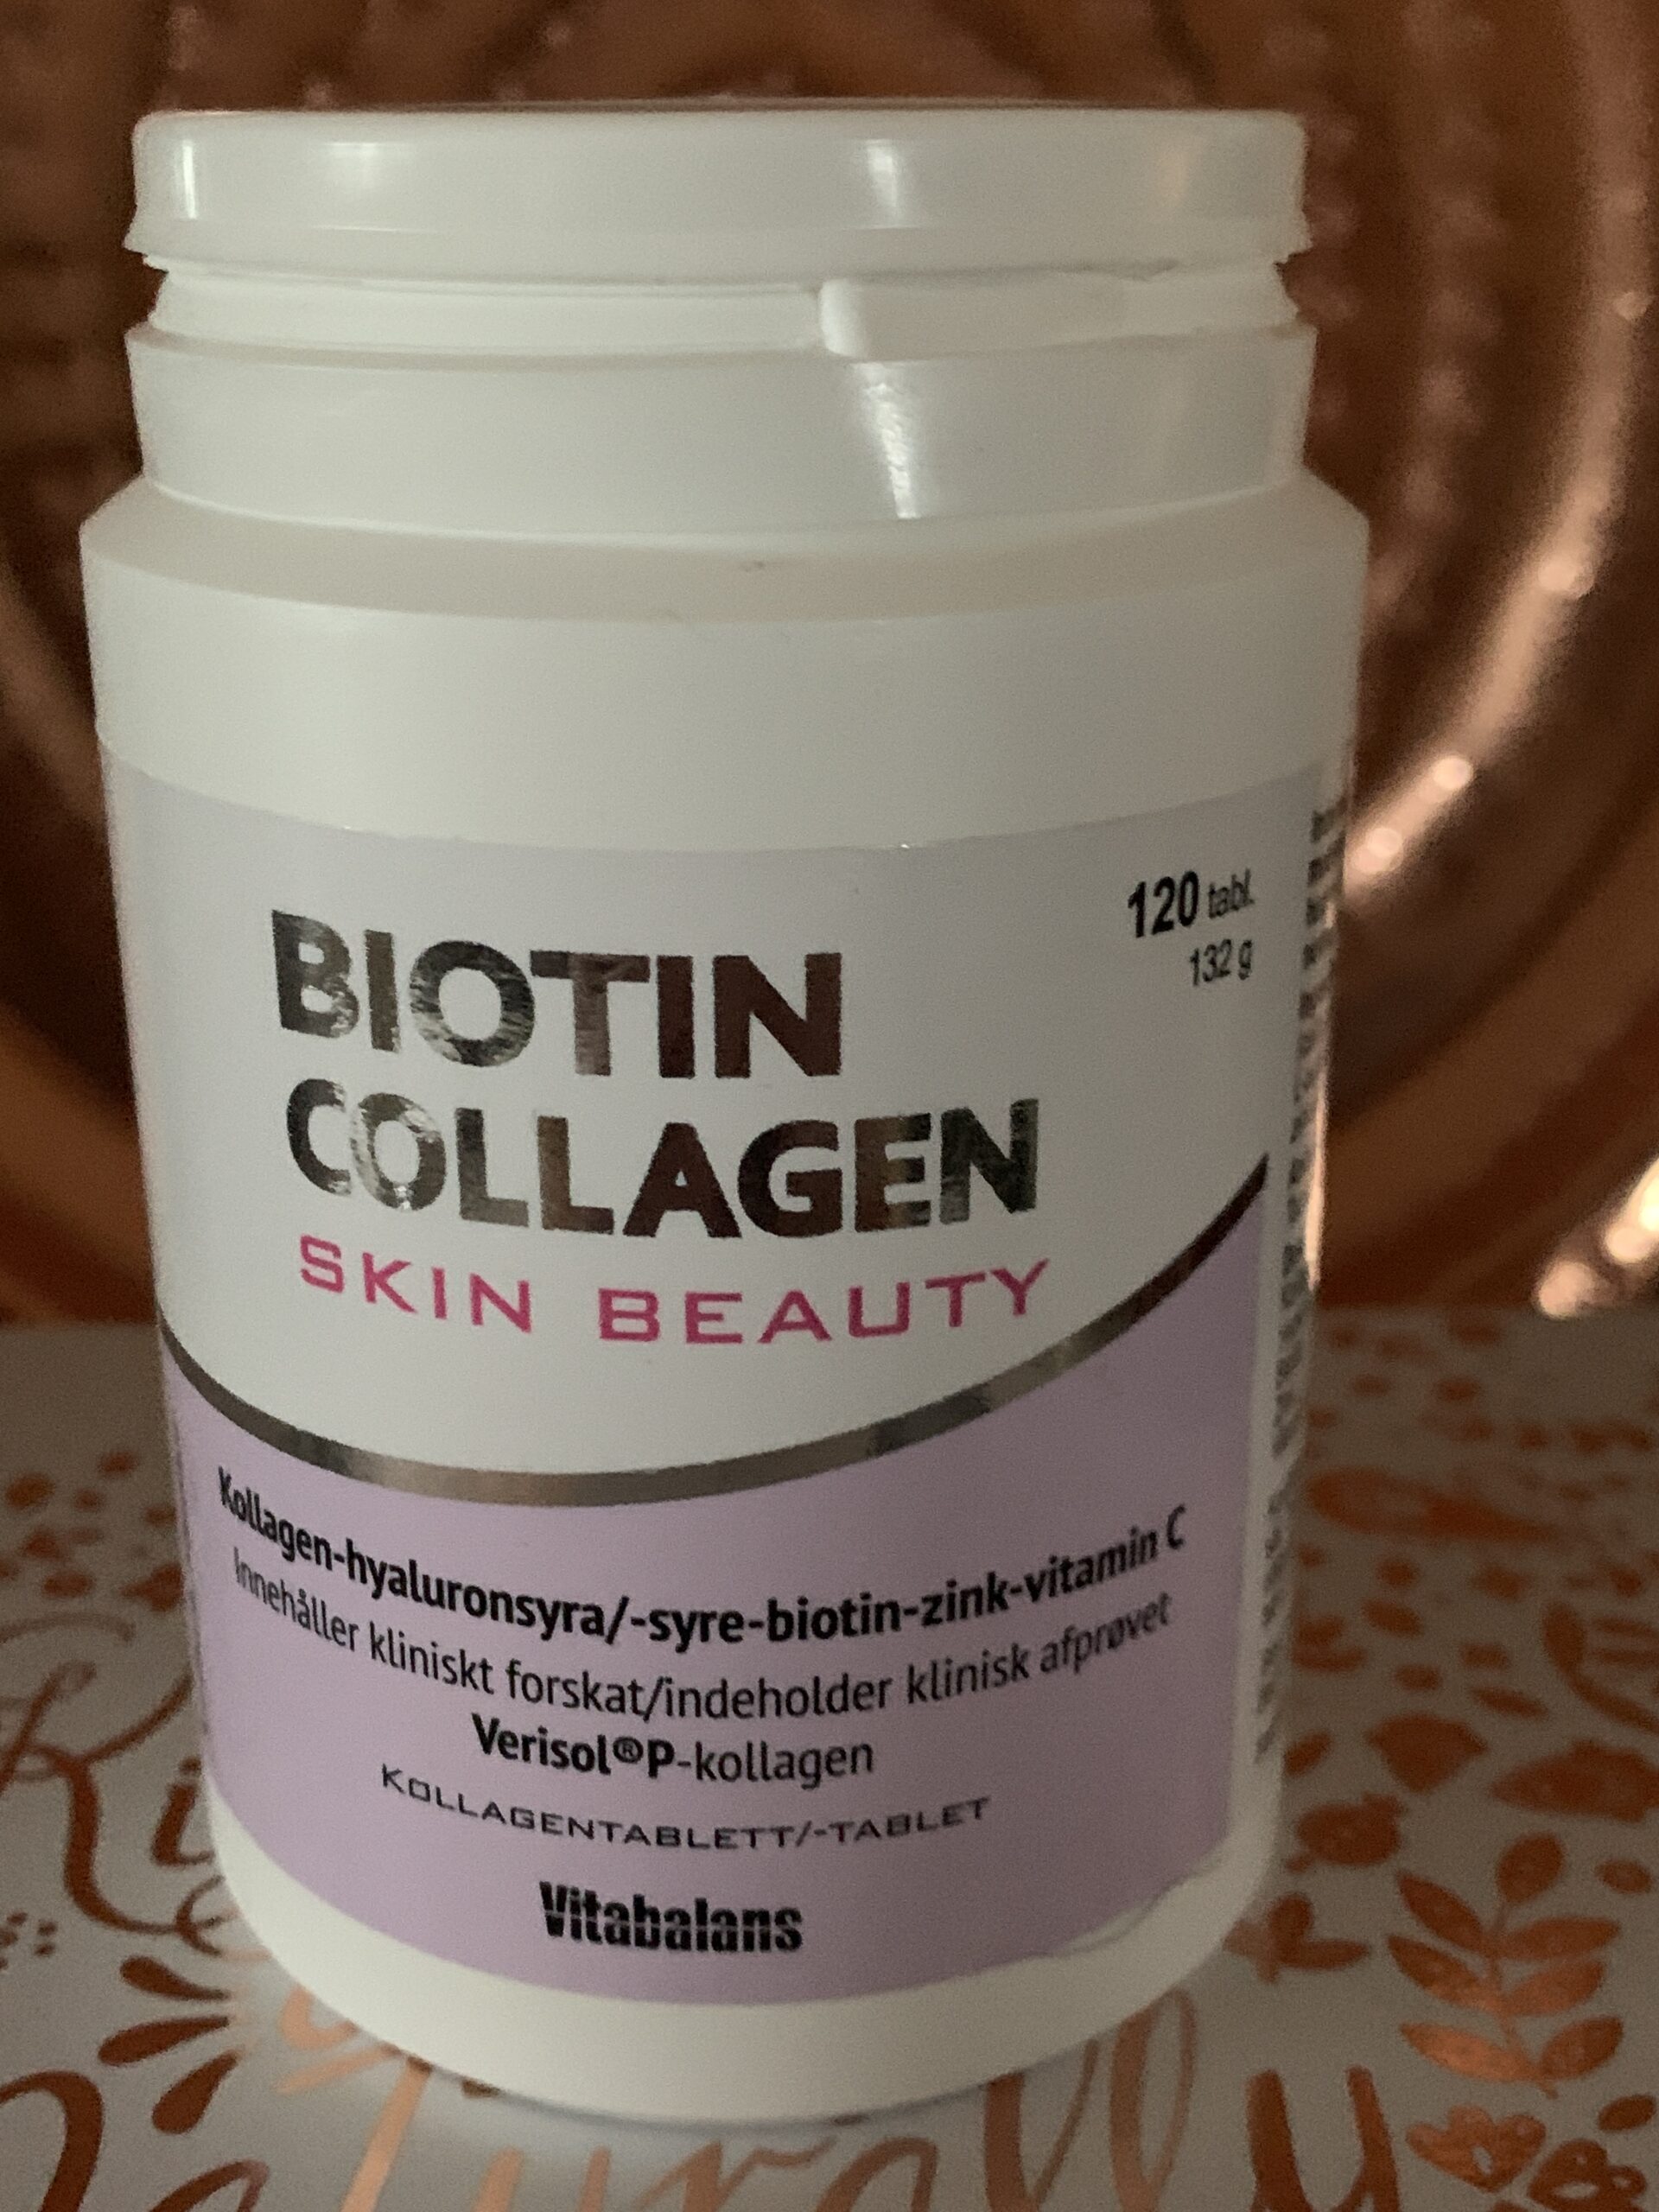 Vitabalans Biotin Collagen